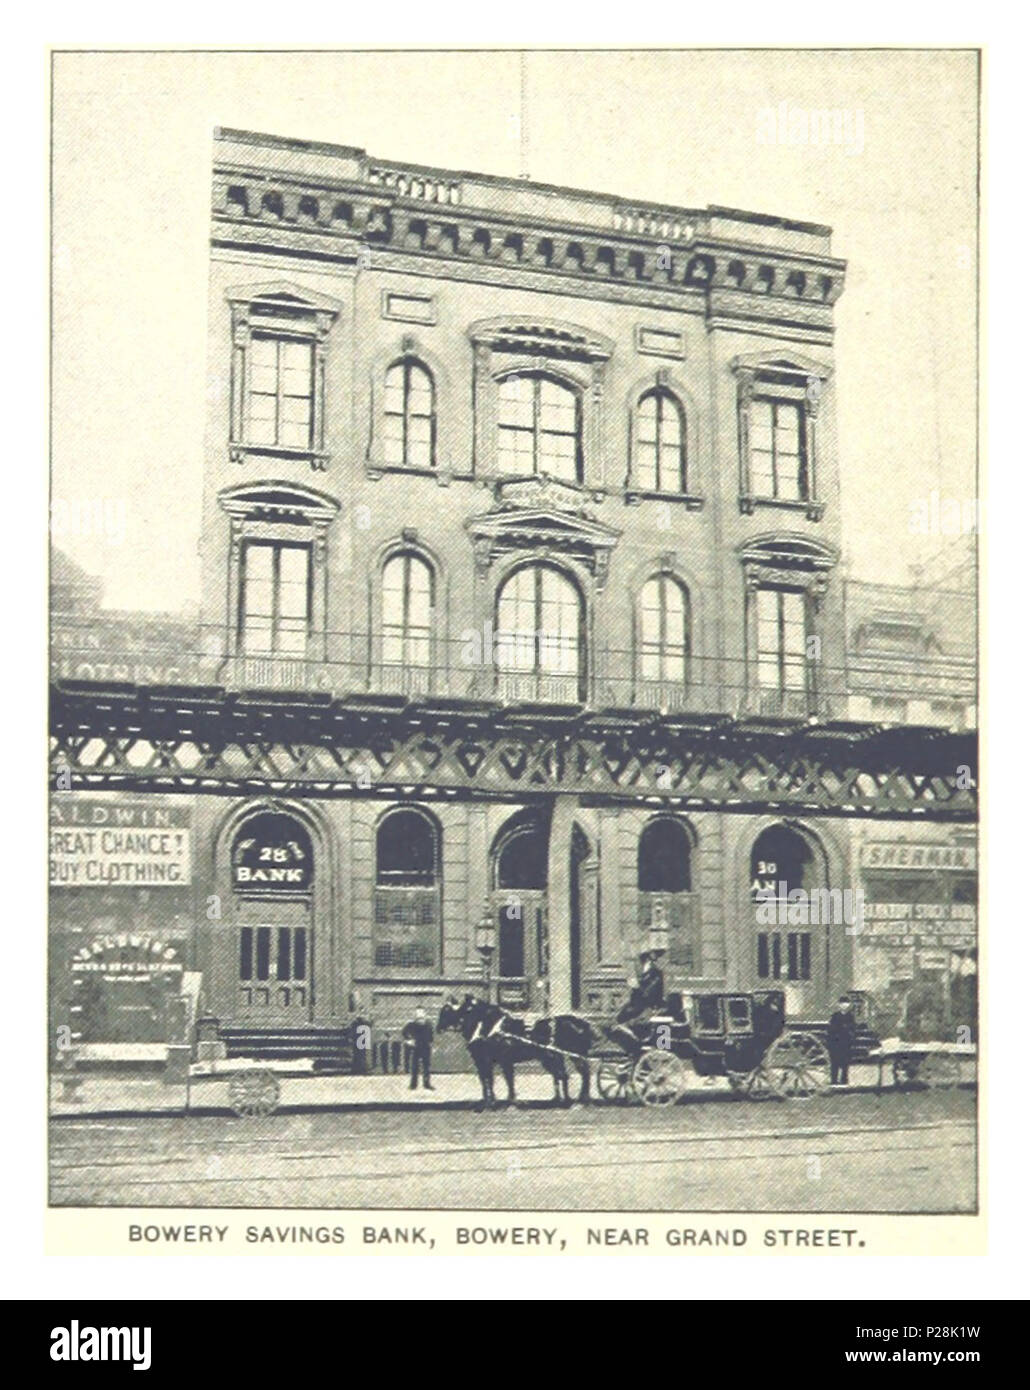 (König 1893, NYC) pg 782 BOWERY SPARKASSE, BOWERY, in der Nähe der Grand Street. Stockfoto